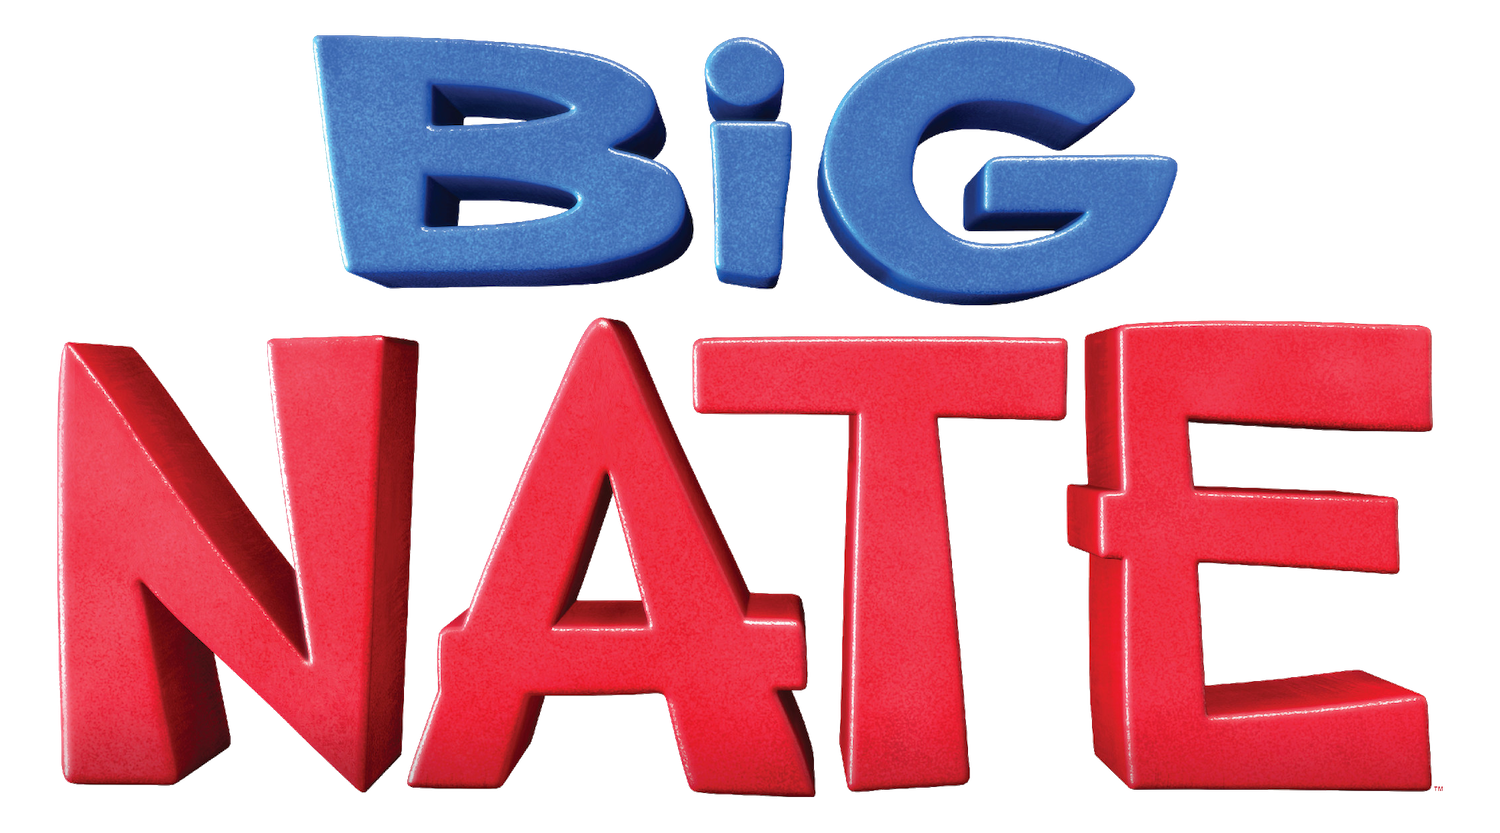 The Big Story, Logopedia